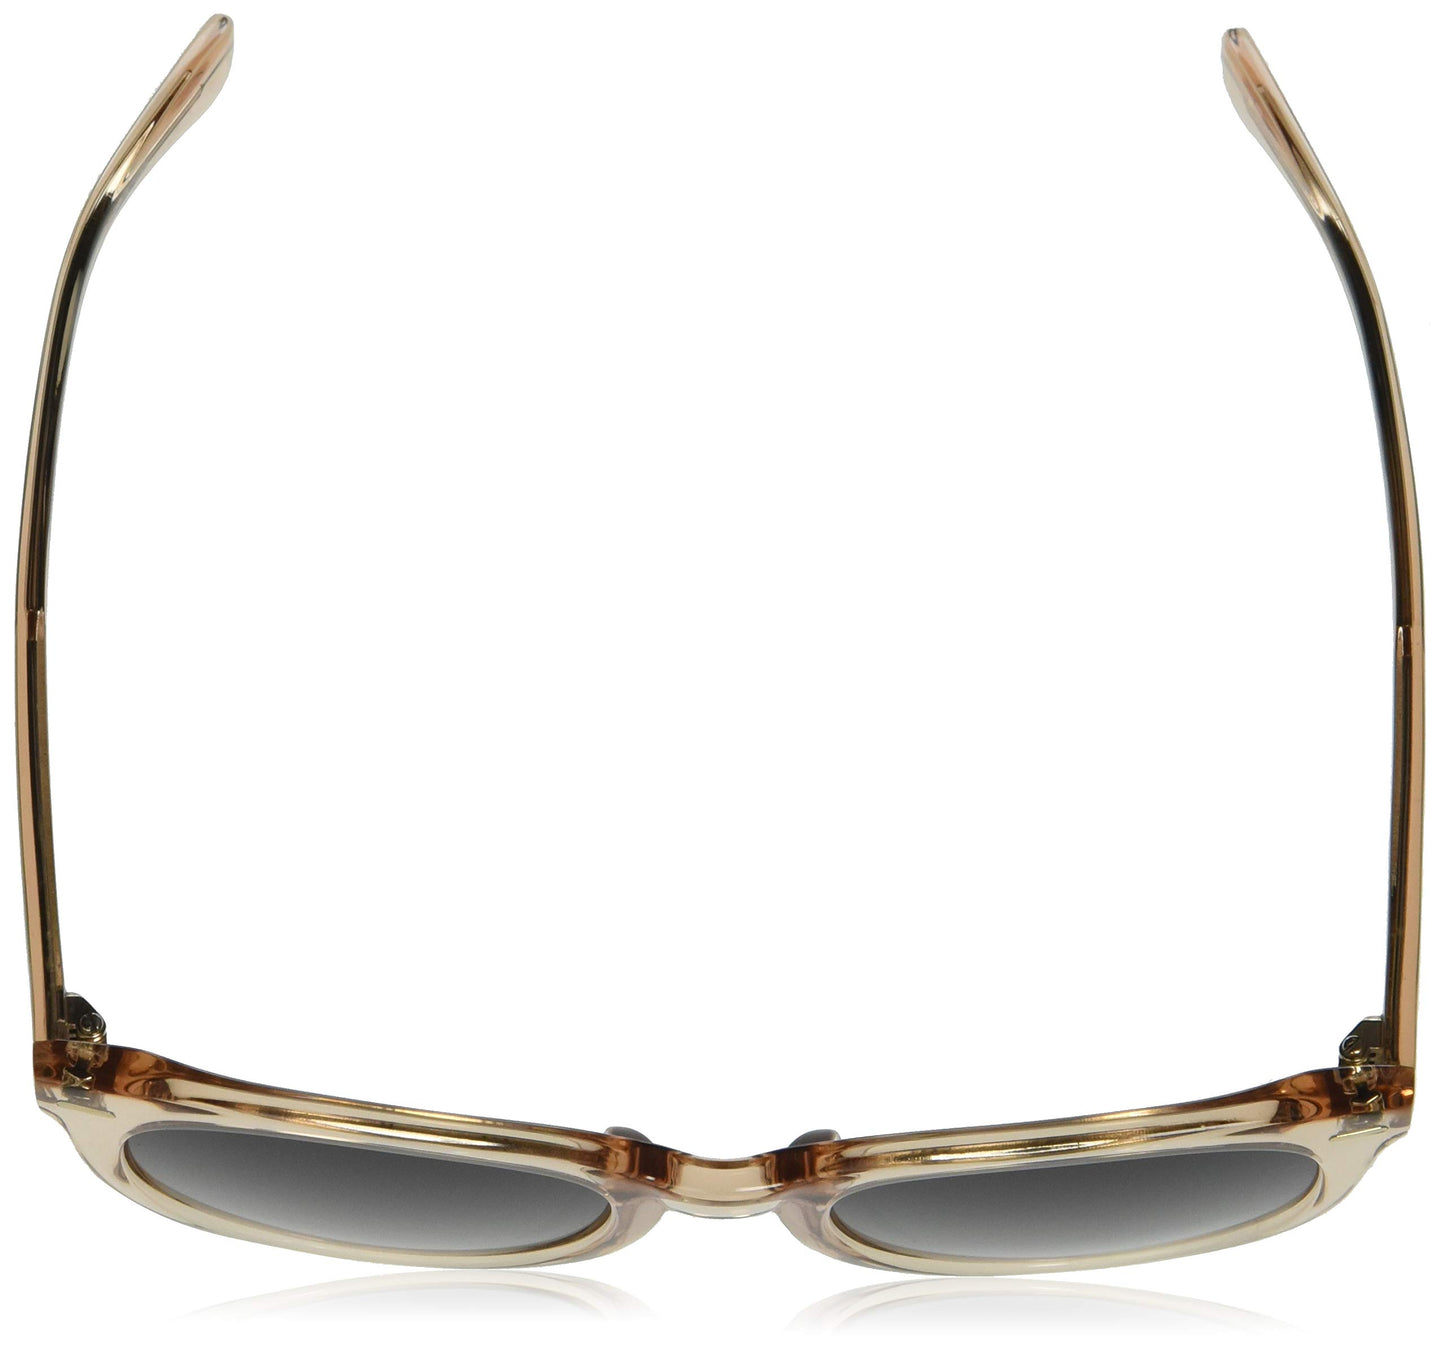 Calvin Klein CK20537S - Sunglasses for Women